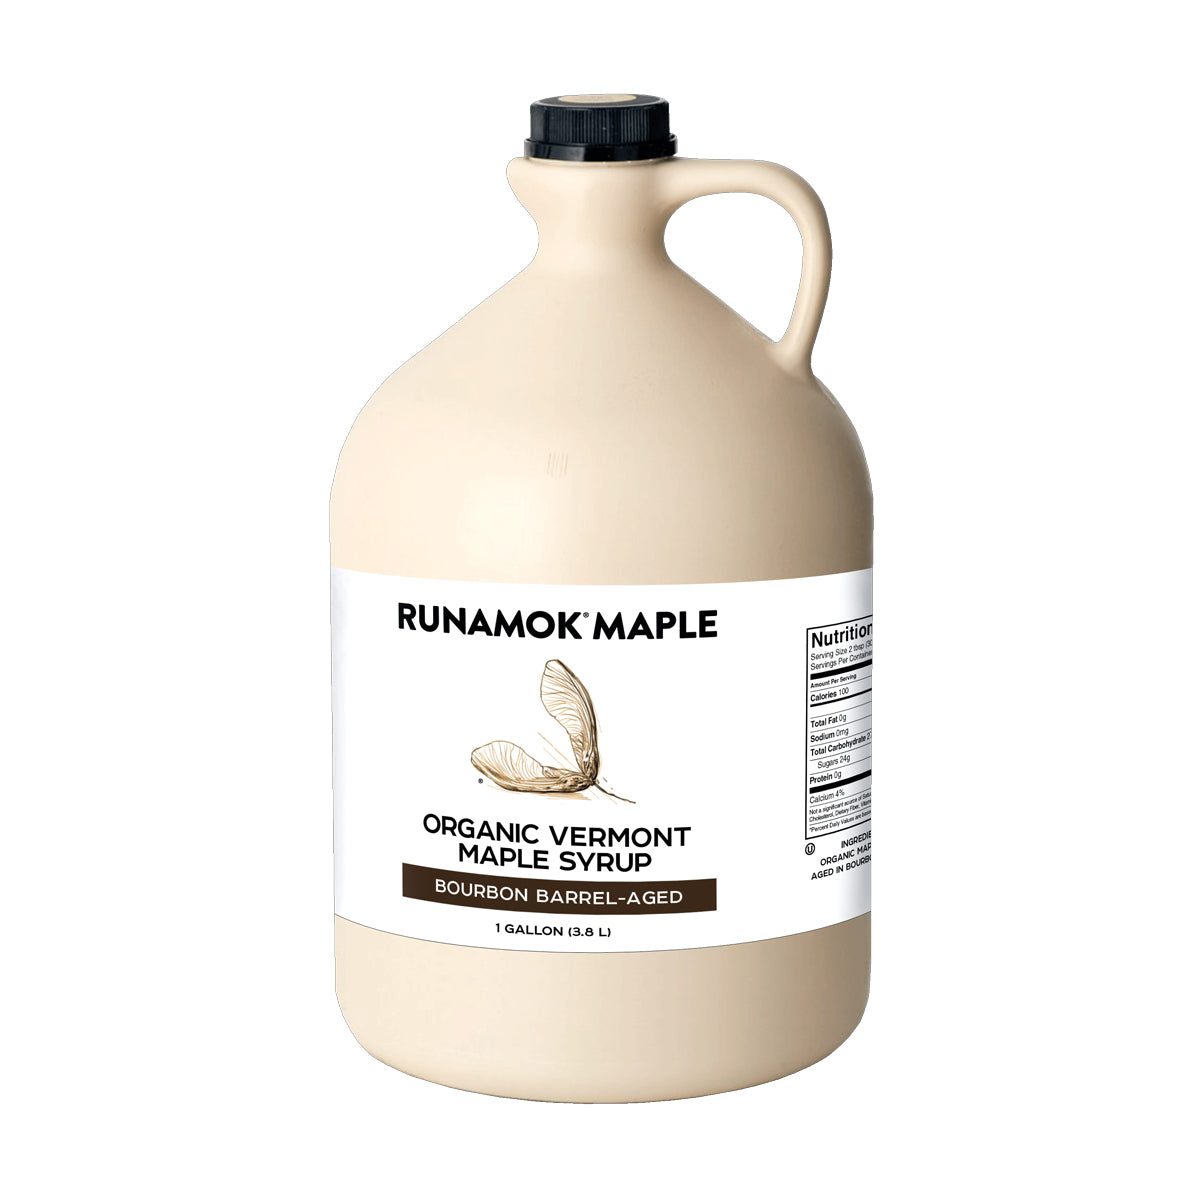 Runamok Bourbon Barrel-Aged Maple Syrup